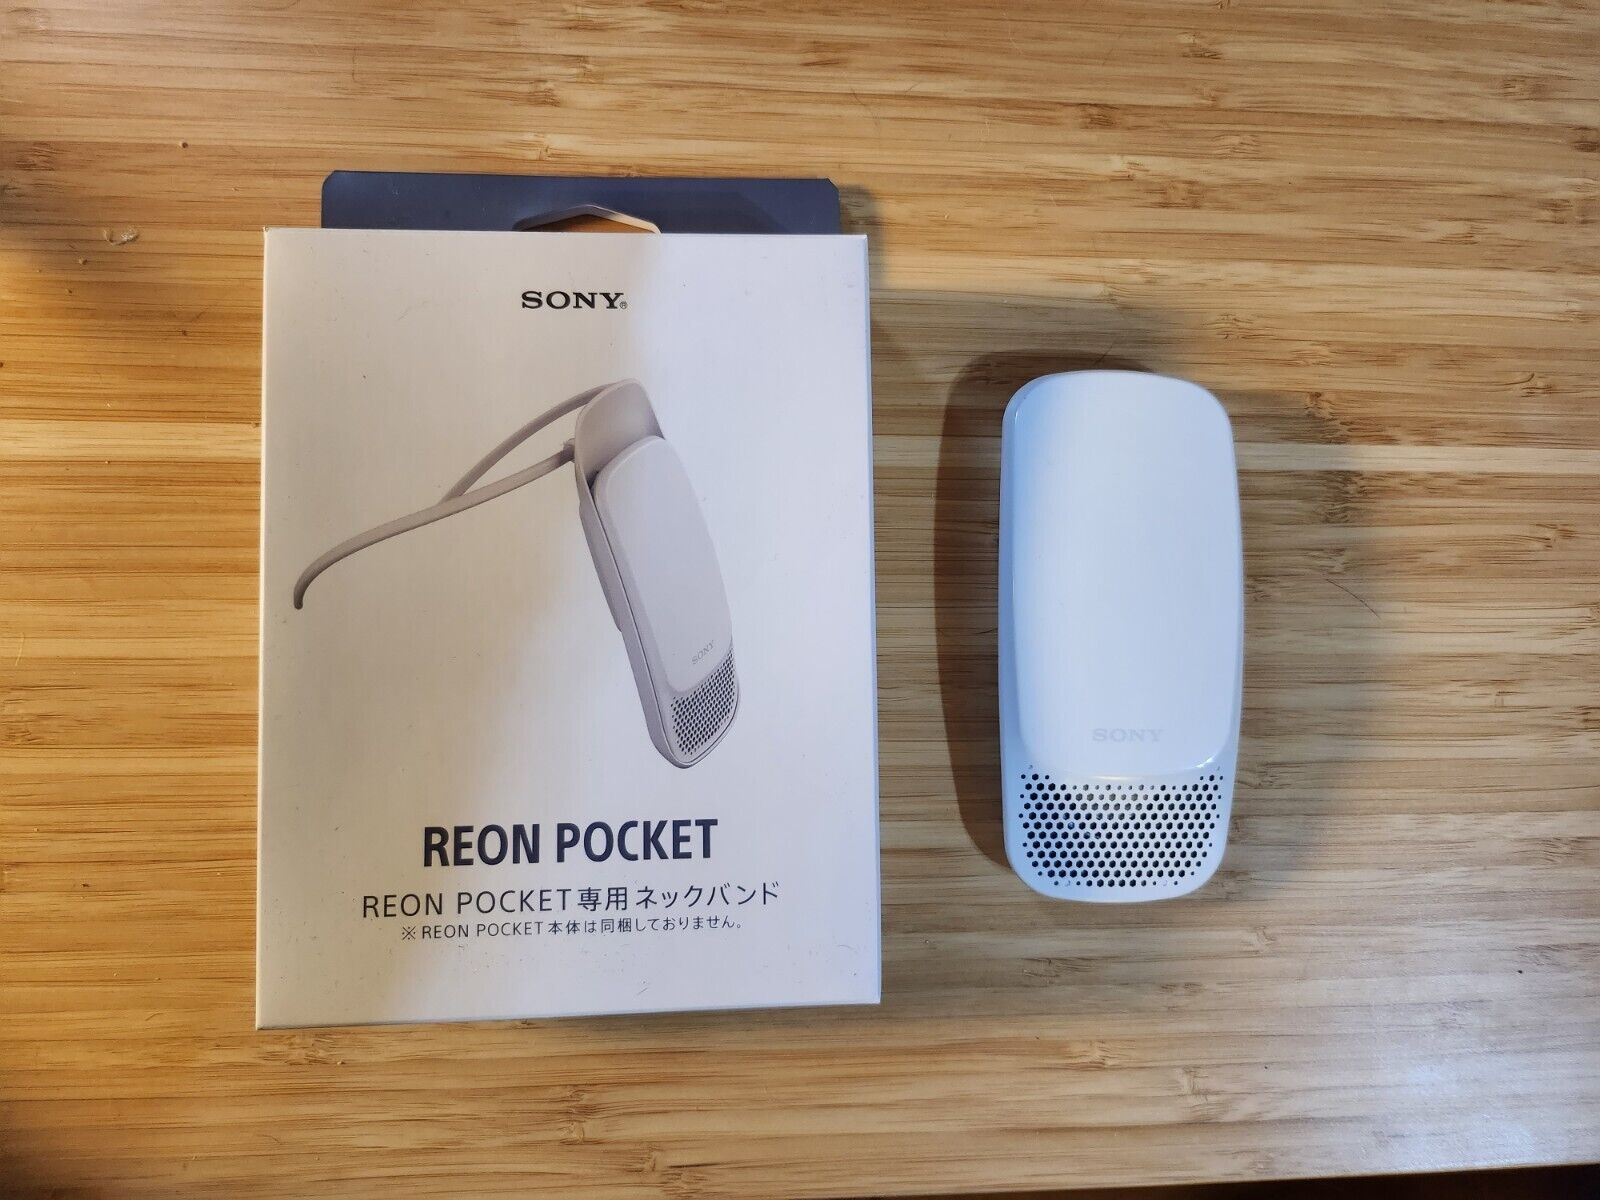 Sony RNP2 Pocket Wearable Cooler - White for sale online | eBay